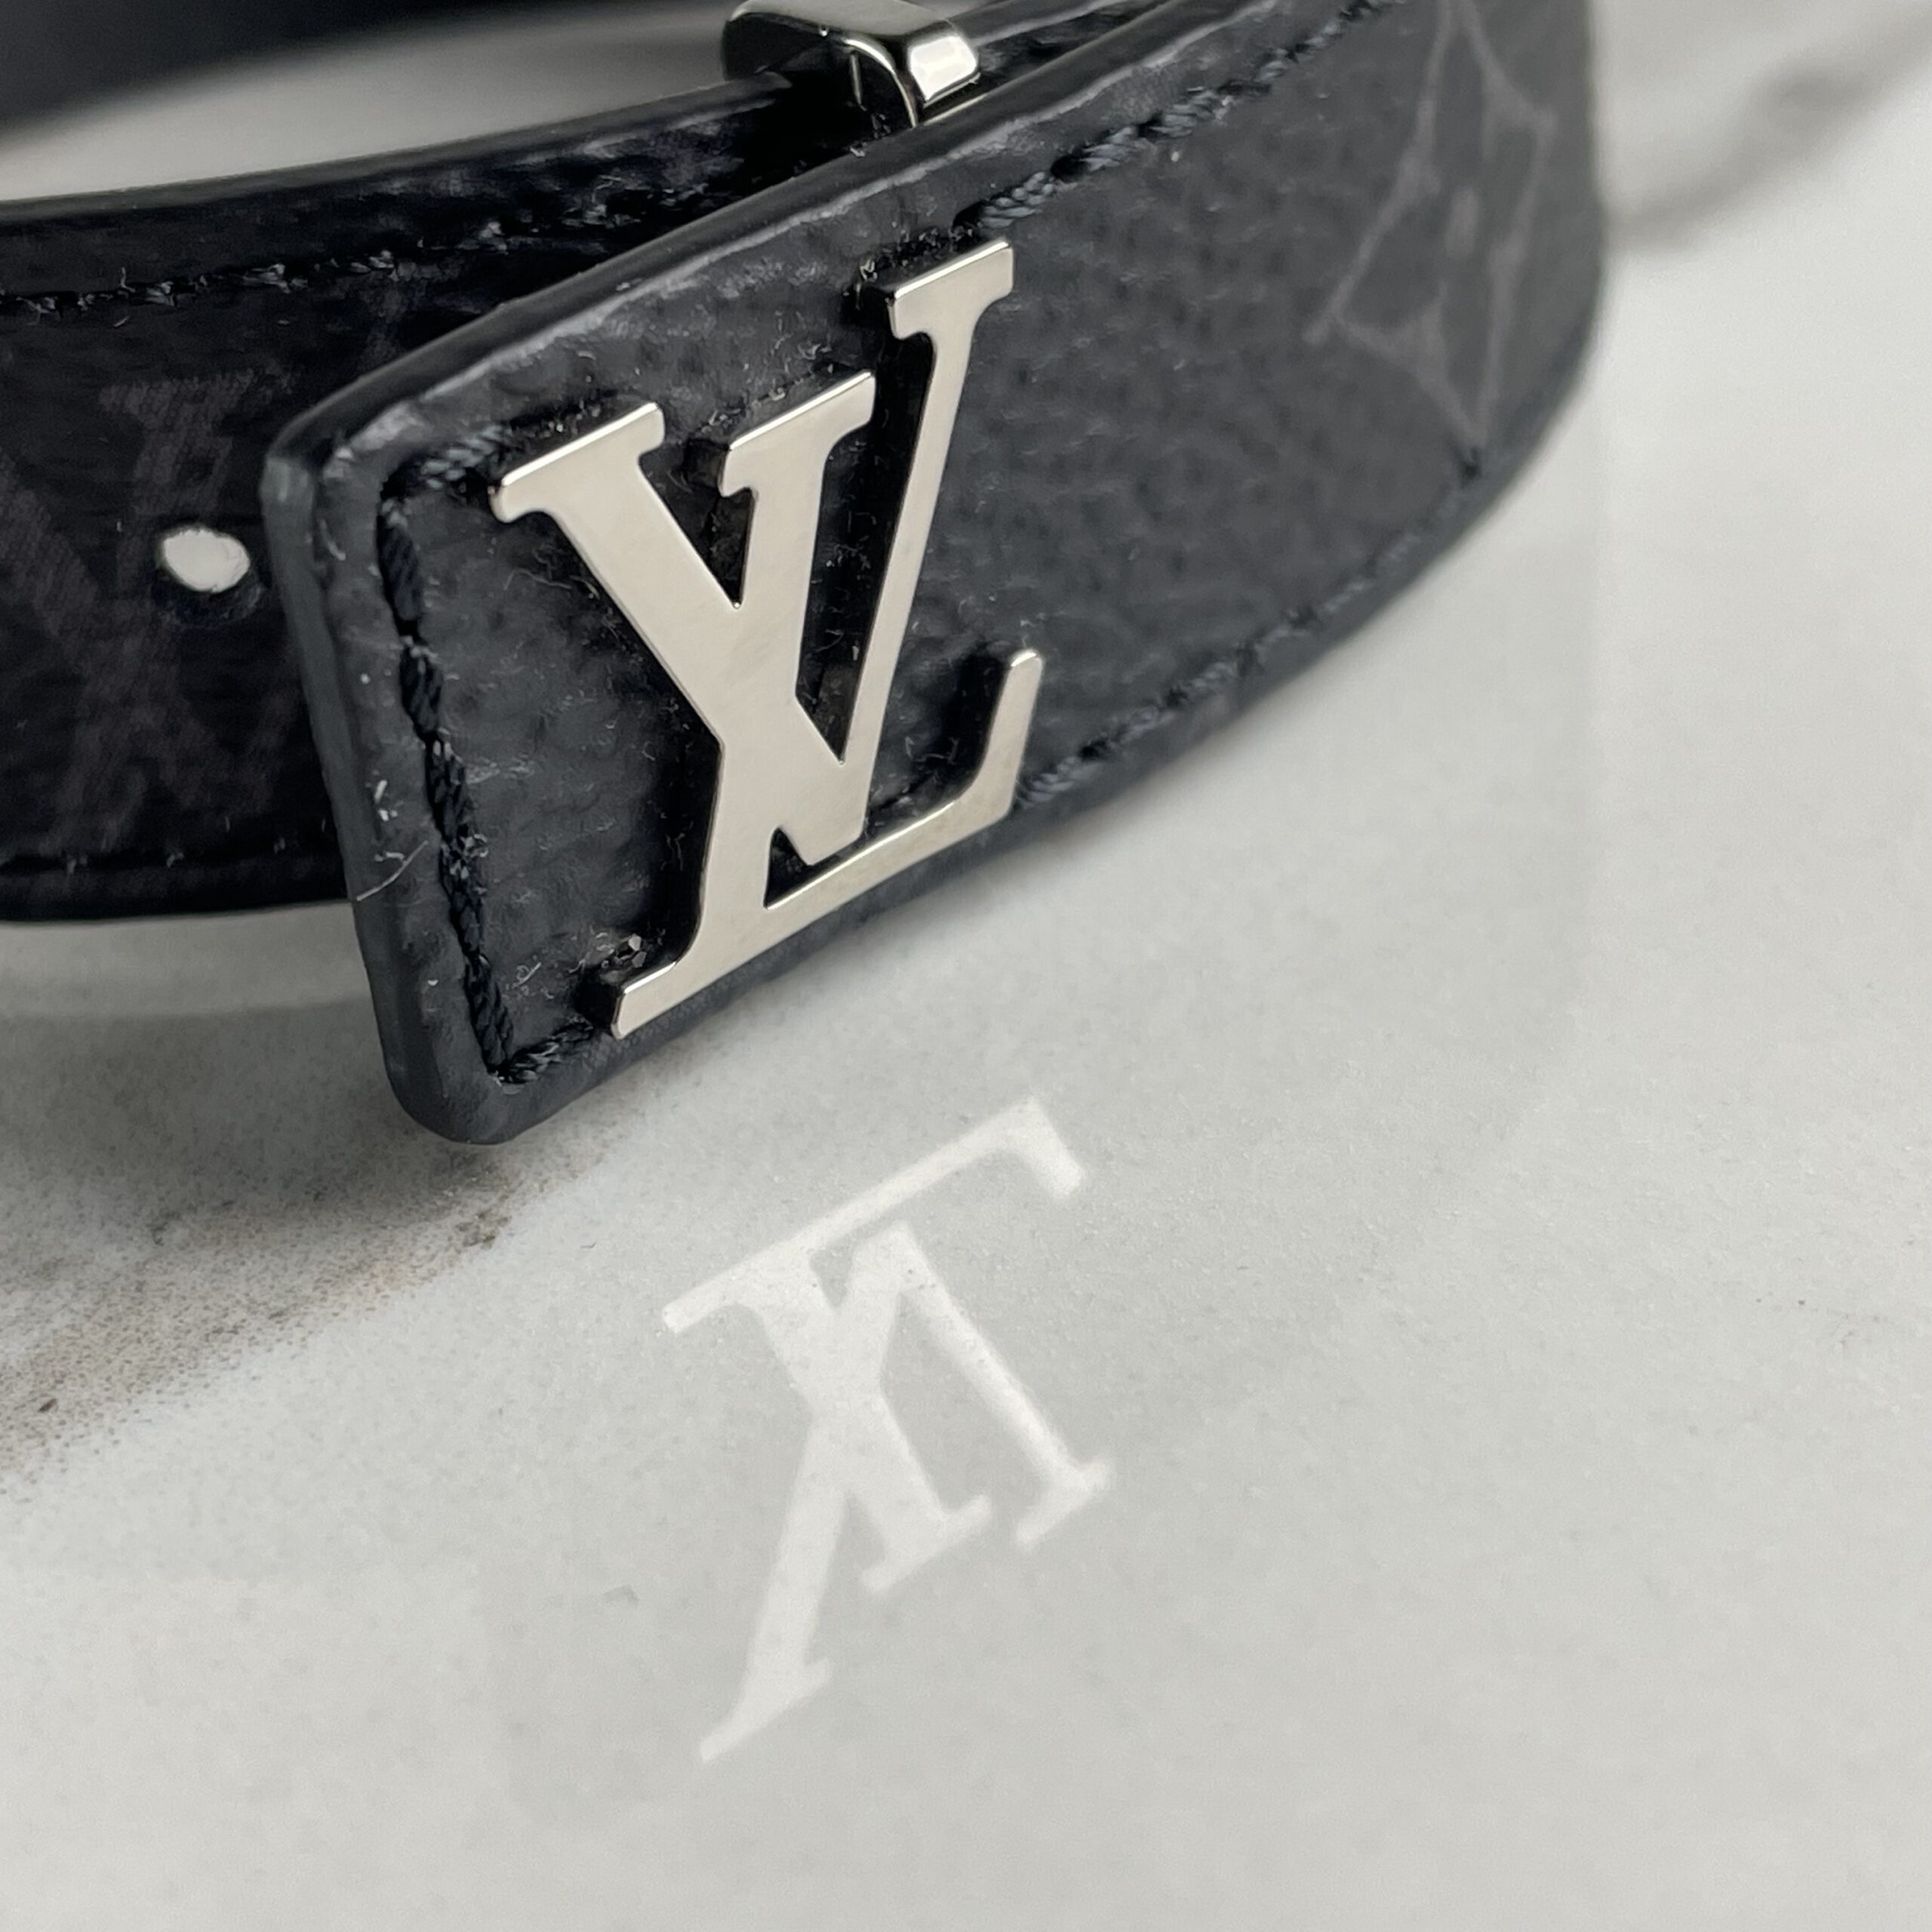 Louis Vuitton Lv Slim Bracelet